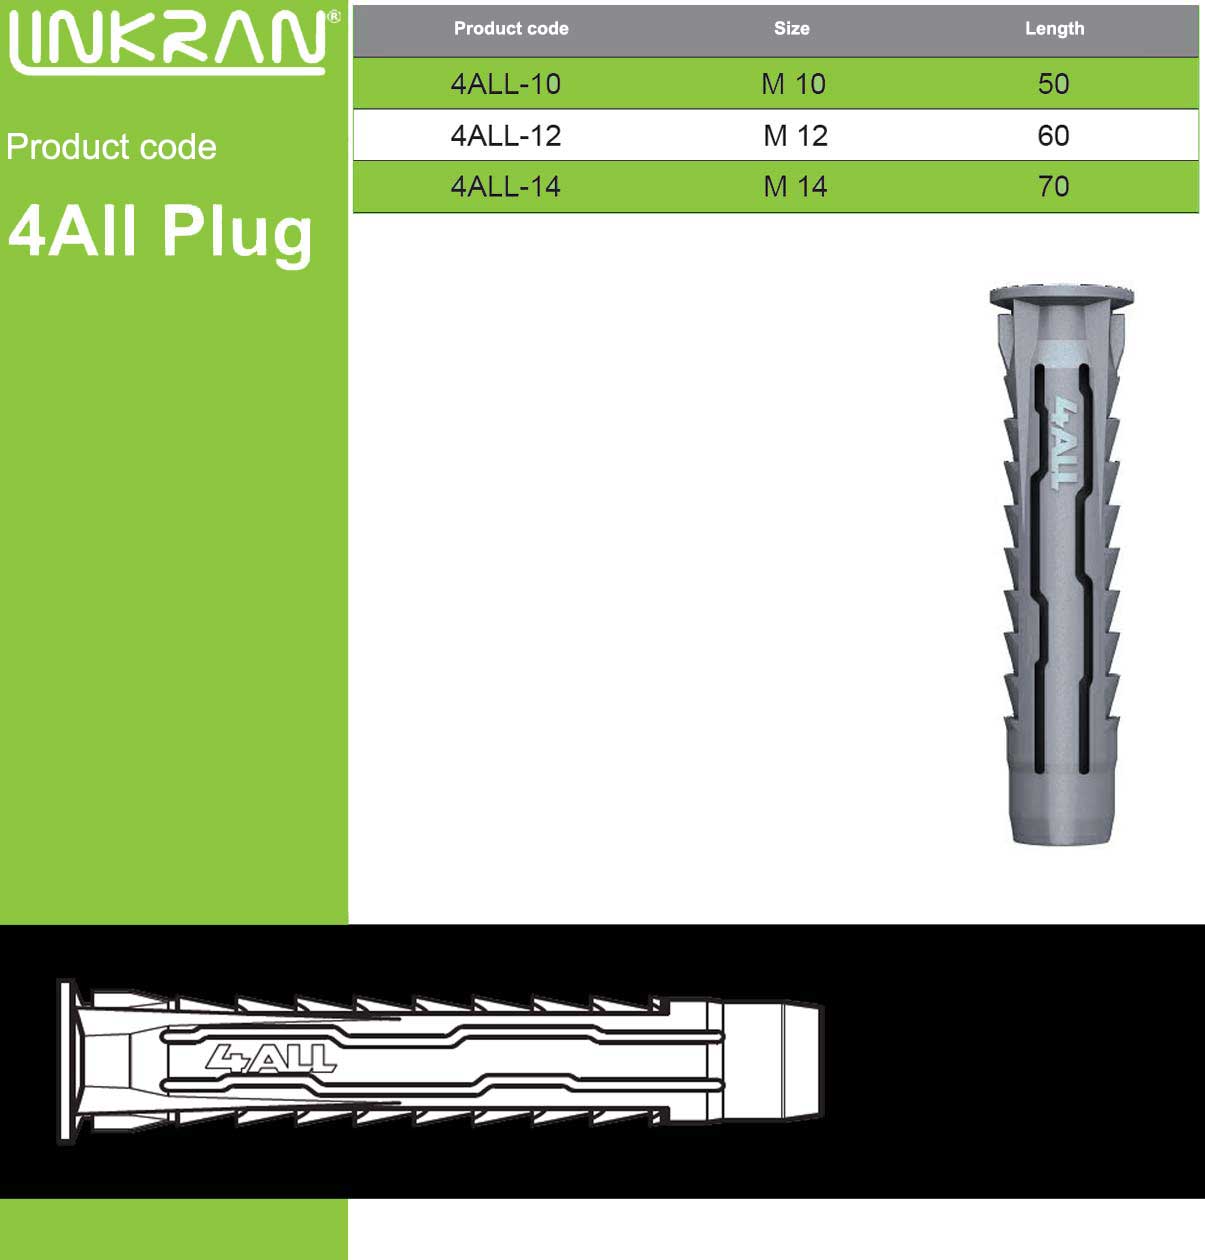 Anchor 4All Plug - Linkran Industrial Group